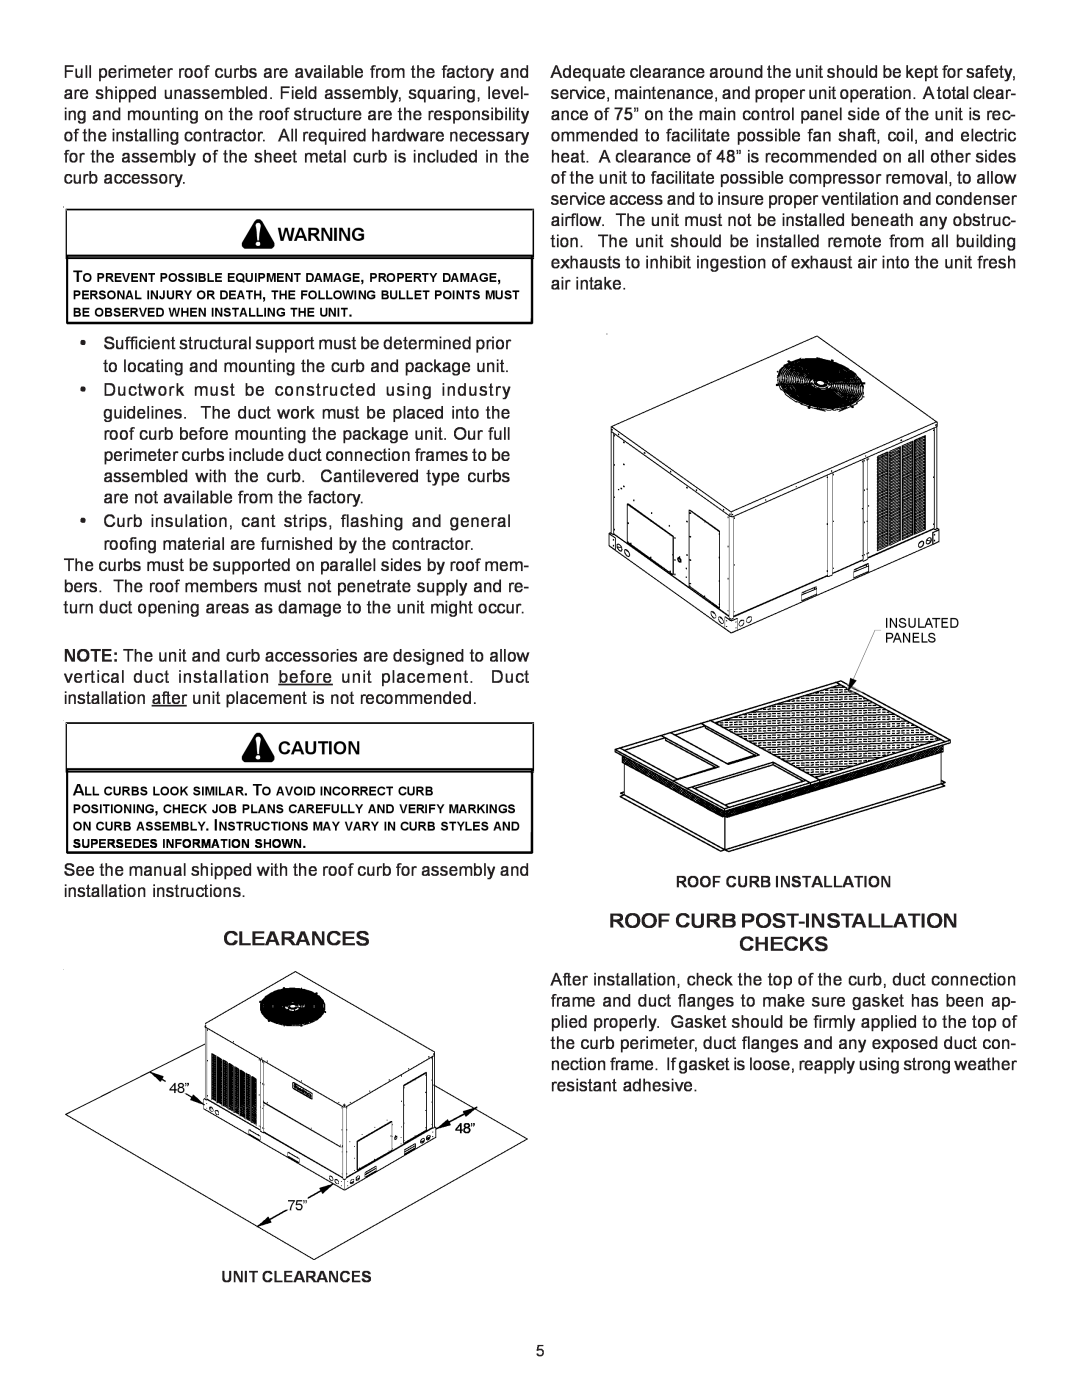 Goodman Mfg CPC/CPH installation instructions Clearances, Roof Curb Post-Installation Checks 